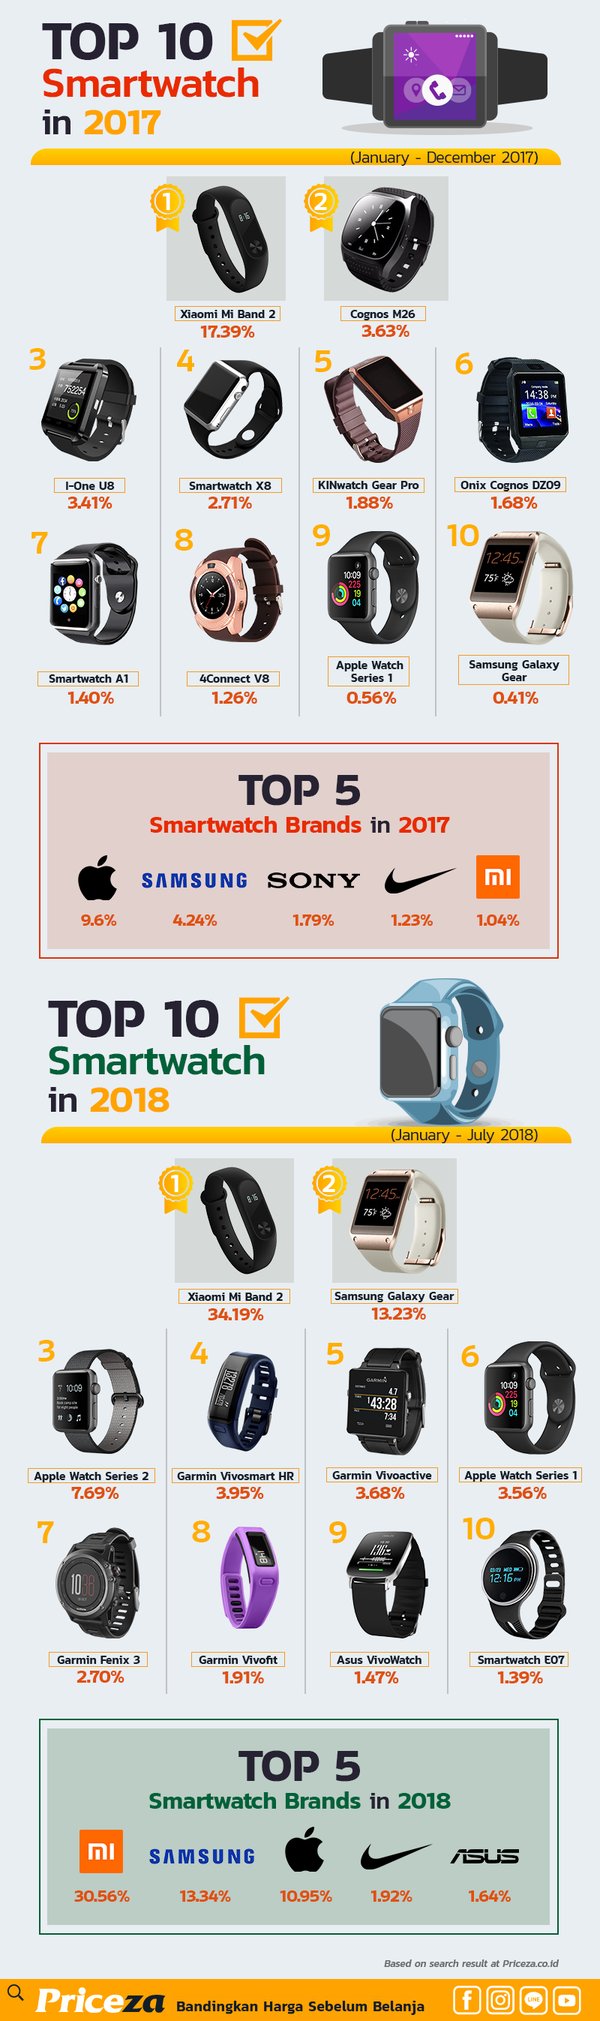 Smartwatch Trends in 2017-2018